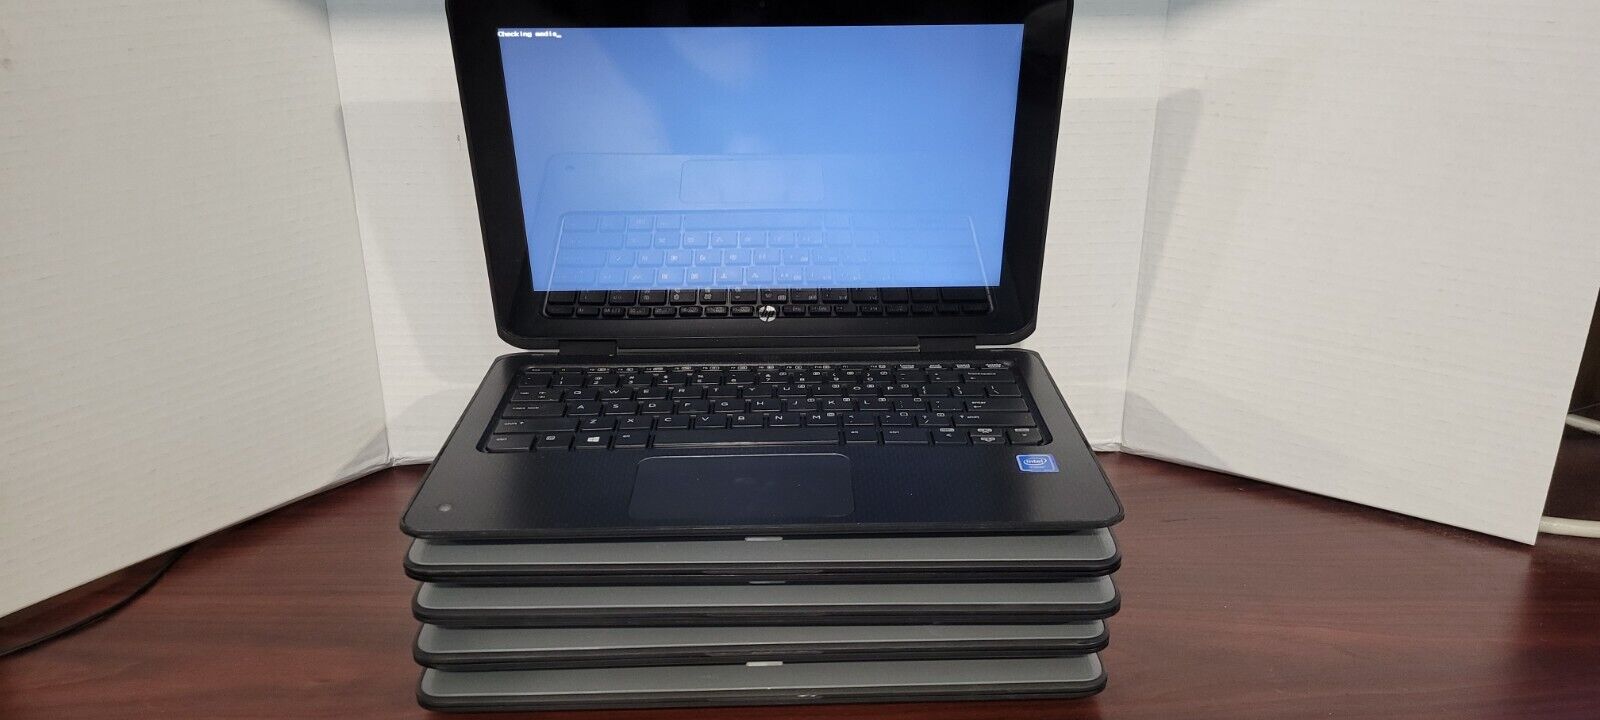 Lot of 5 HP Probook x360 11 G1 EE Celeron N3350 4GB RAM NO SSD/OS #92